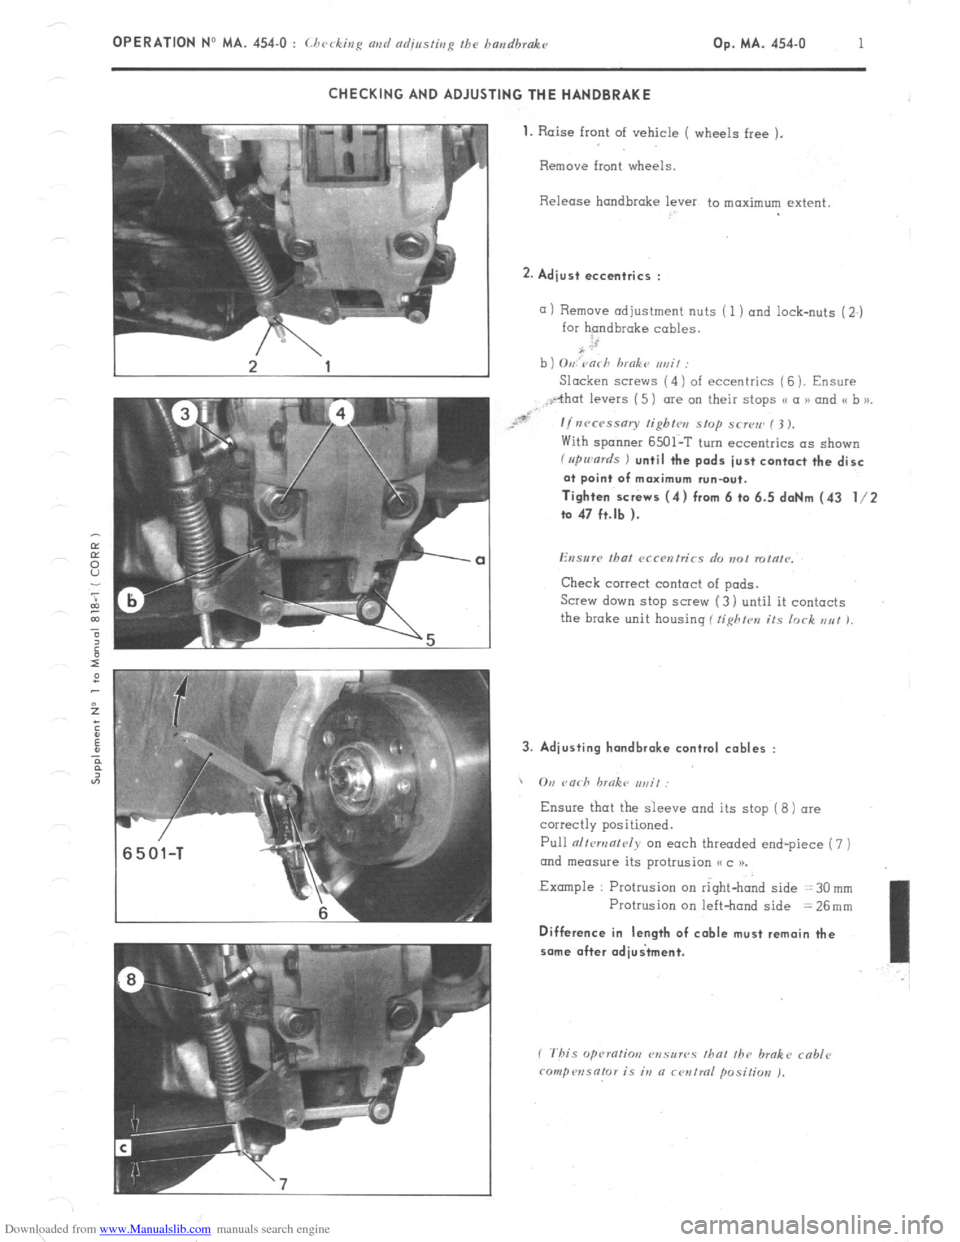 Citroen CX 1985 1.G Workshop Manual Downloaded from www.Manualslib.com manuals search engine OPERATION No MA. 454-O : Lhcckiu~ avd adjnsfbrR fhe bandbrake op. MA. 454-u I CHECKING AND ADJUSTING THE HANDBRAKE 
1. 
Raise front of vehicle 